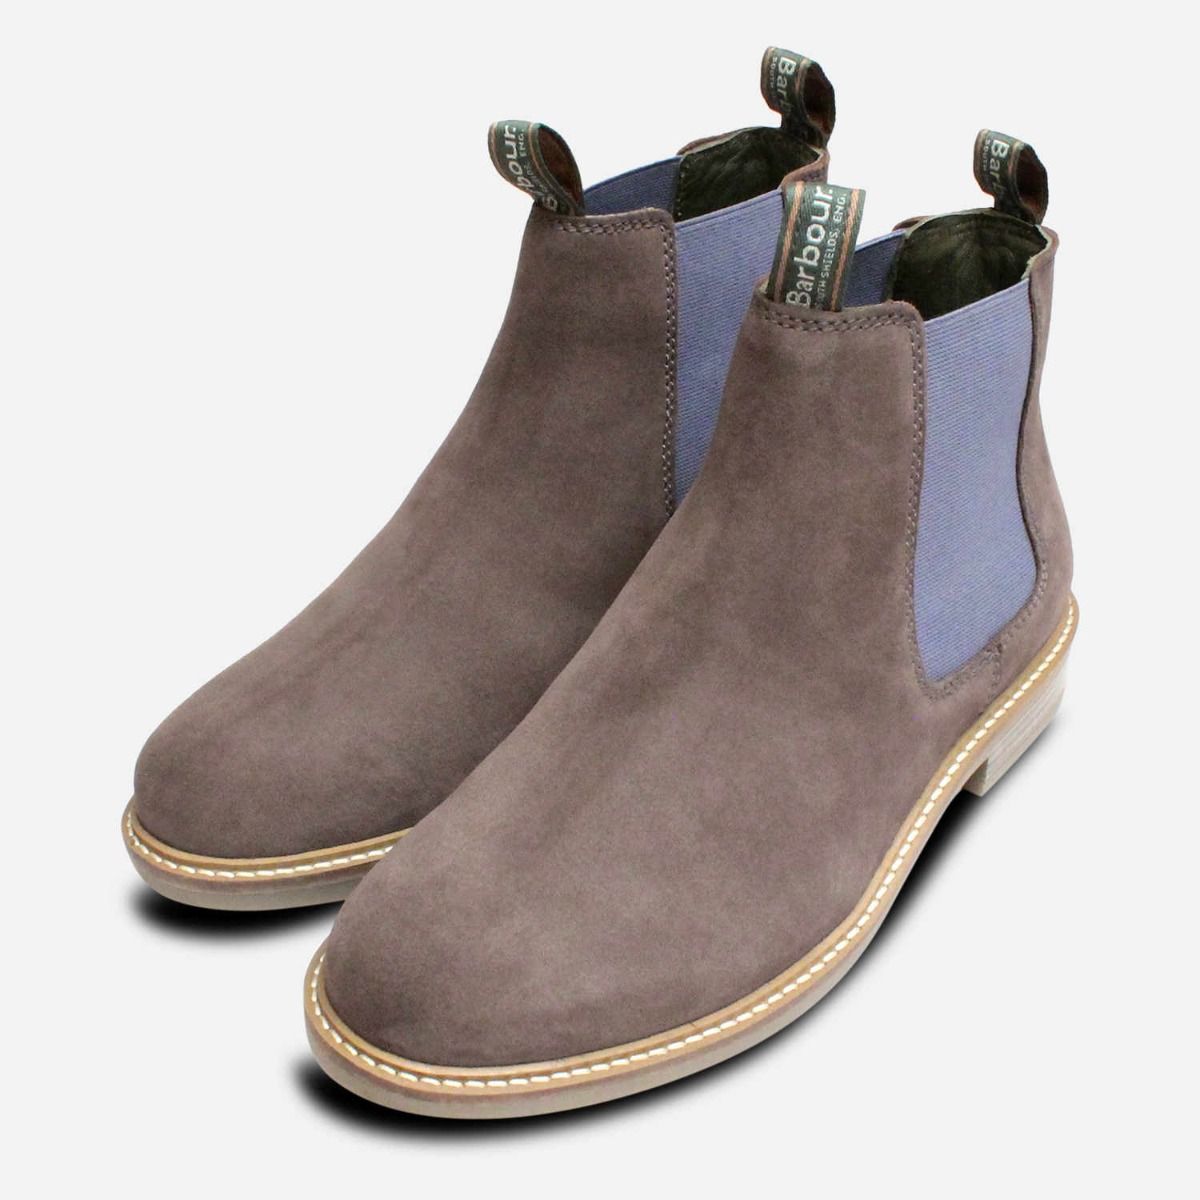 grey suede chelsea boots ladies